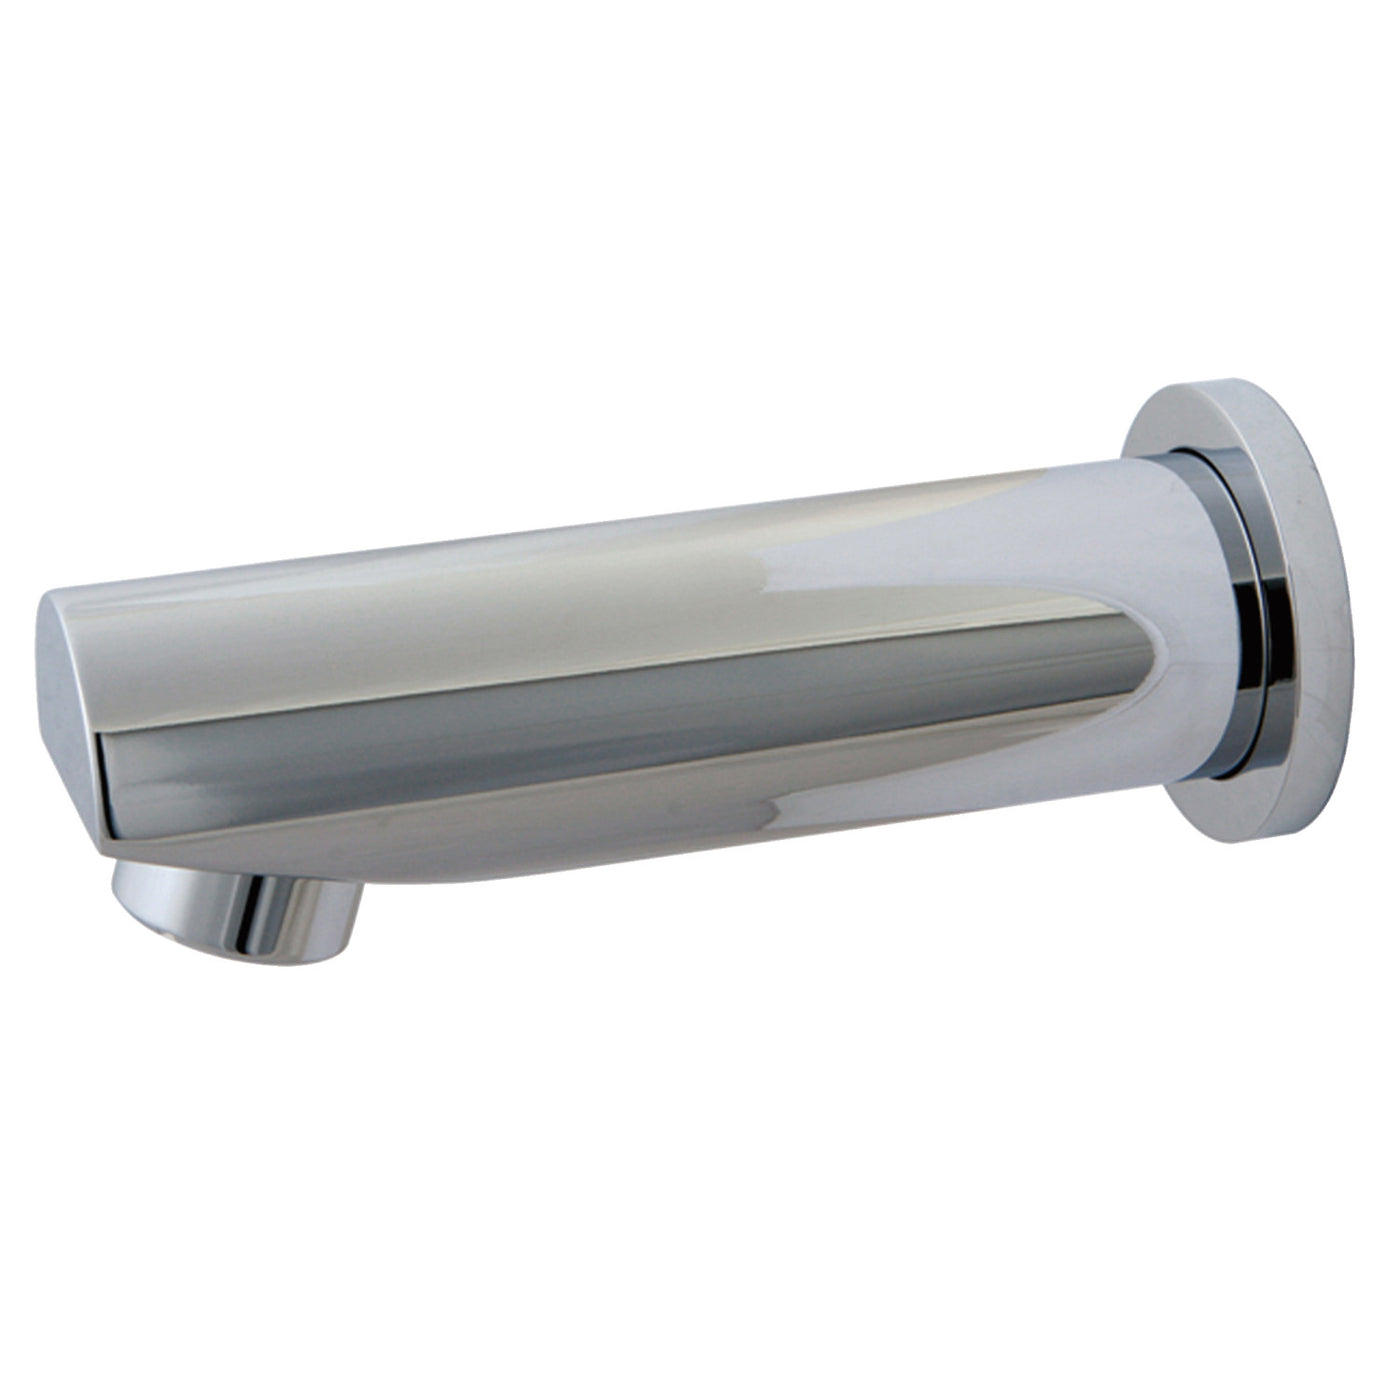 Elements of Design DK8187A1 Tub Faucet Spout with Flange, Polished Chrome